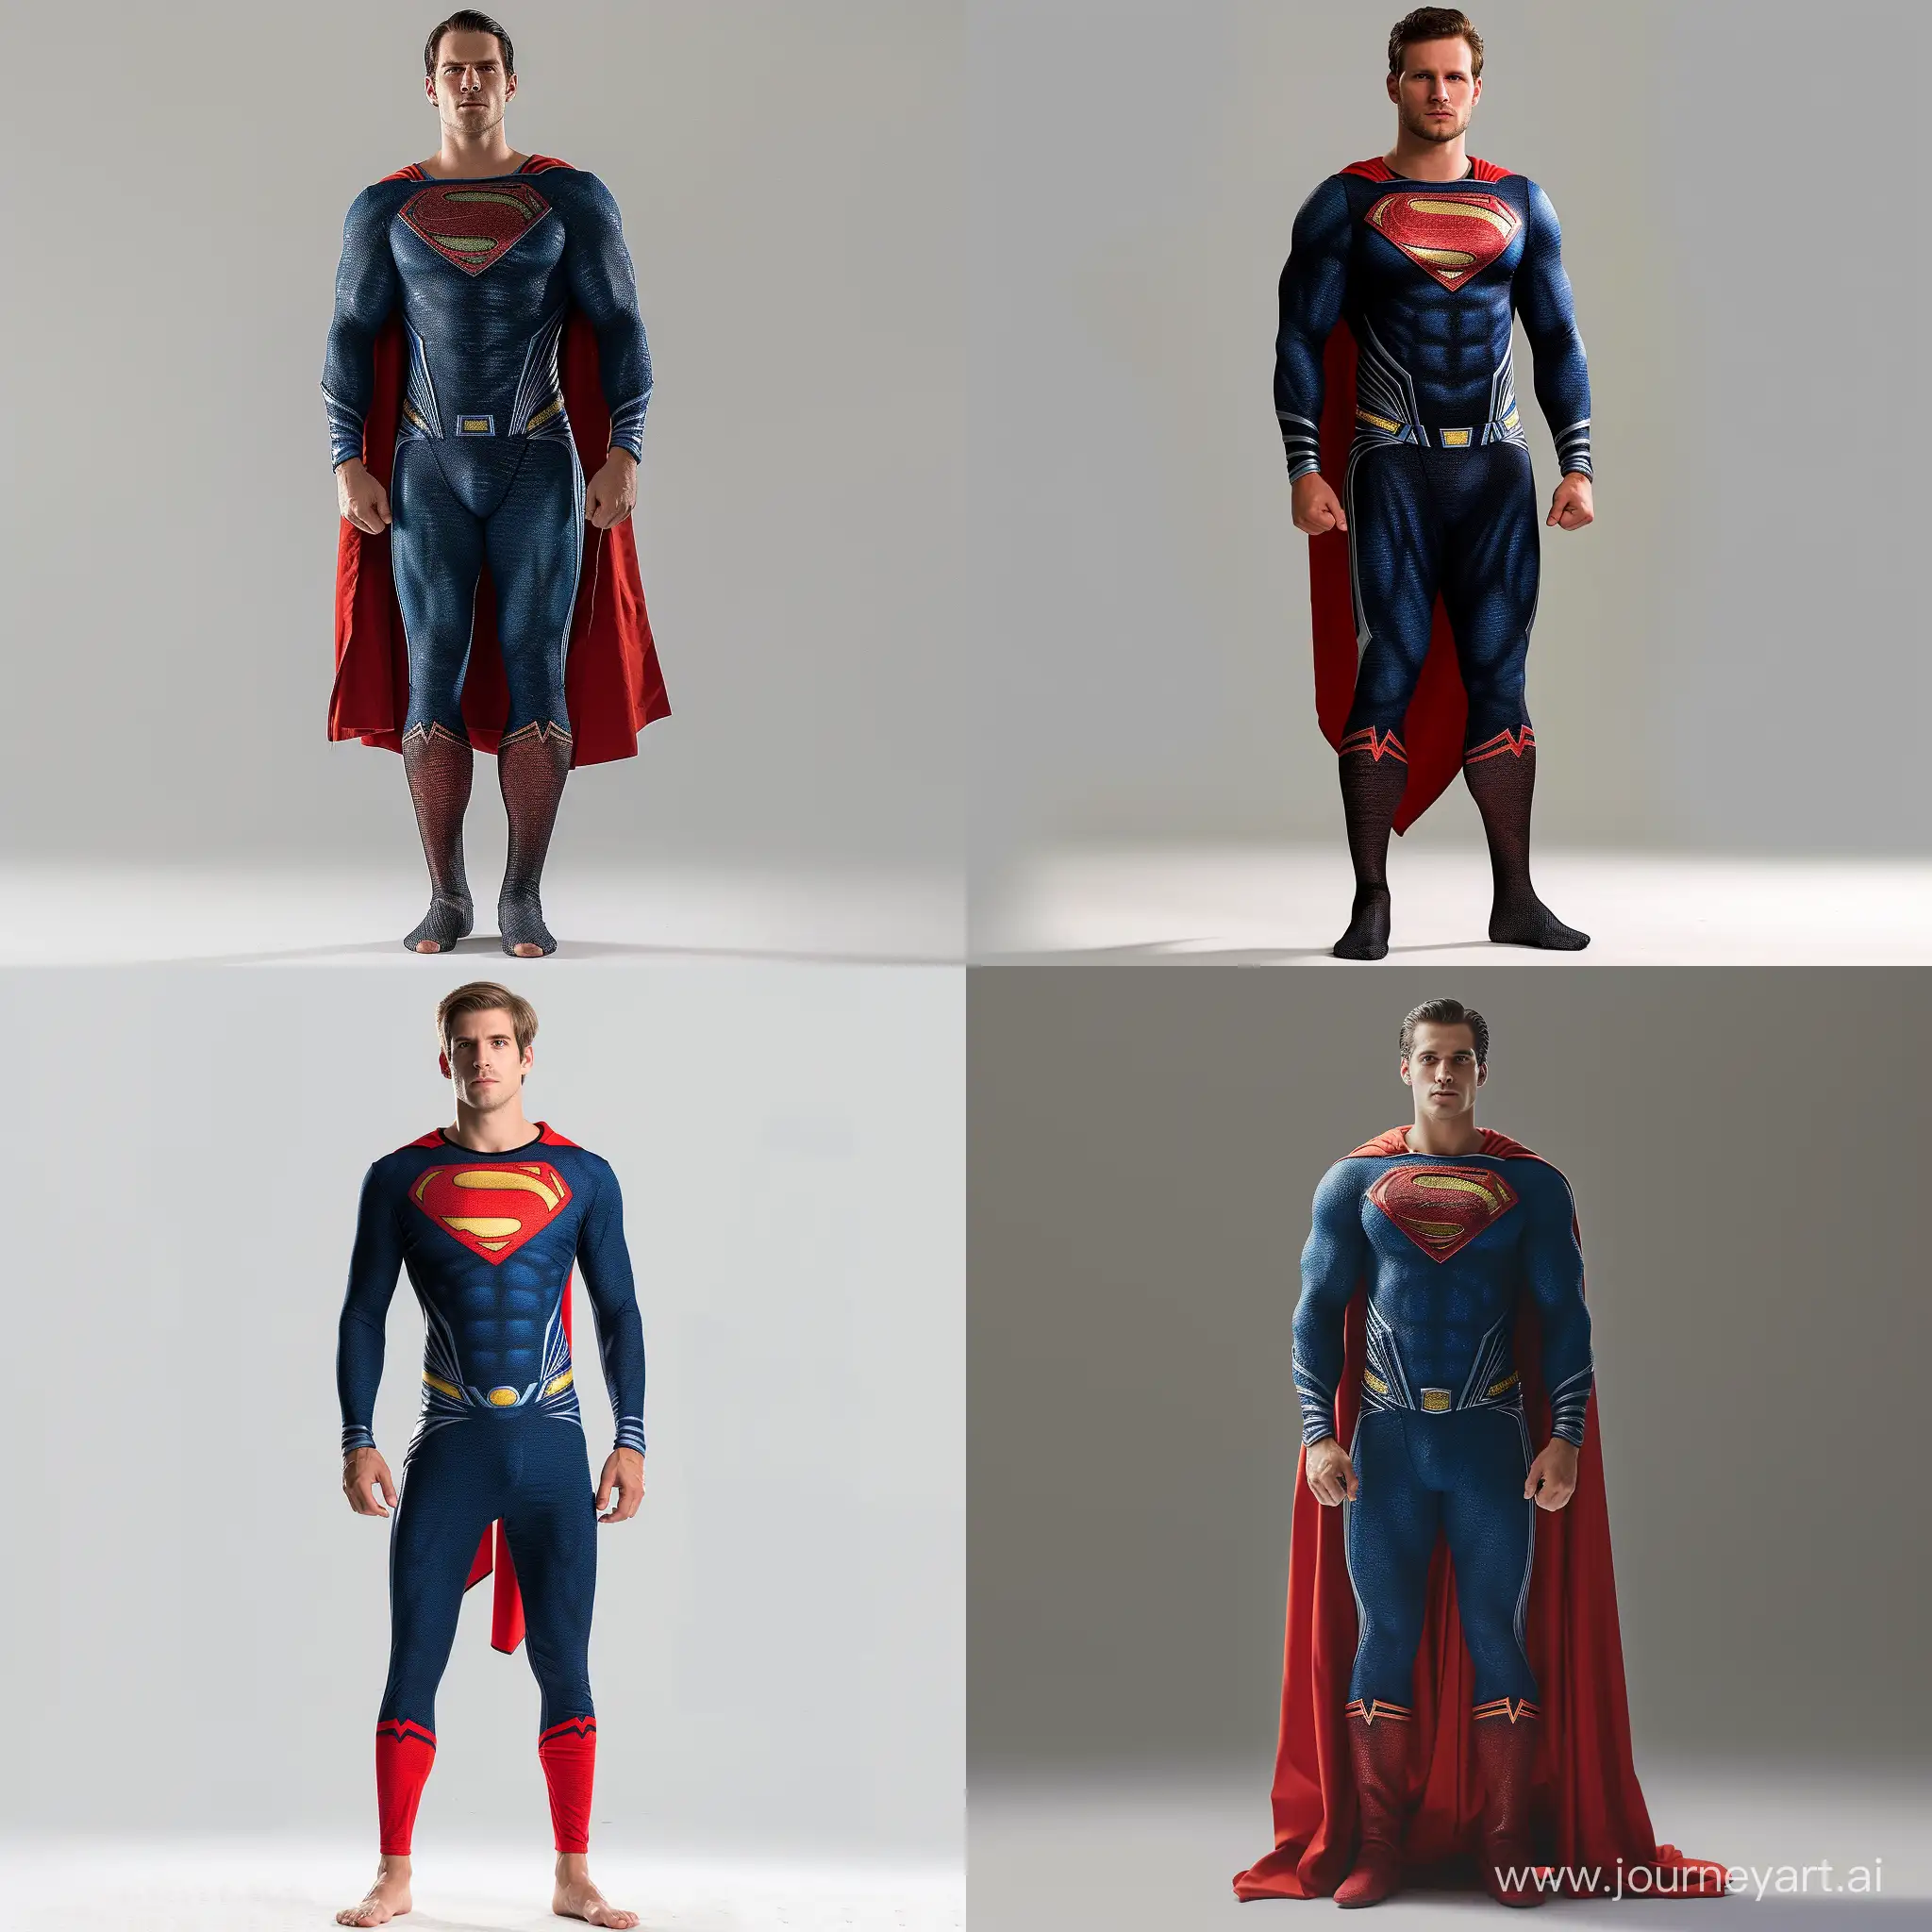 Male-Model-in-Superman-Costume-Poses-in-Full-Body-View